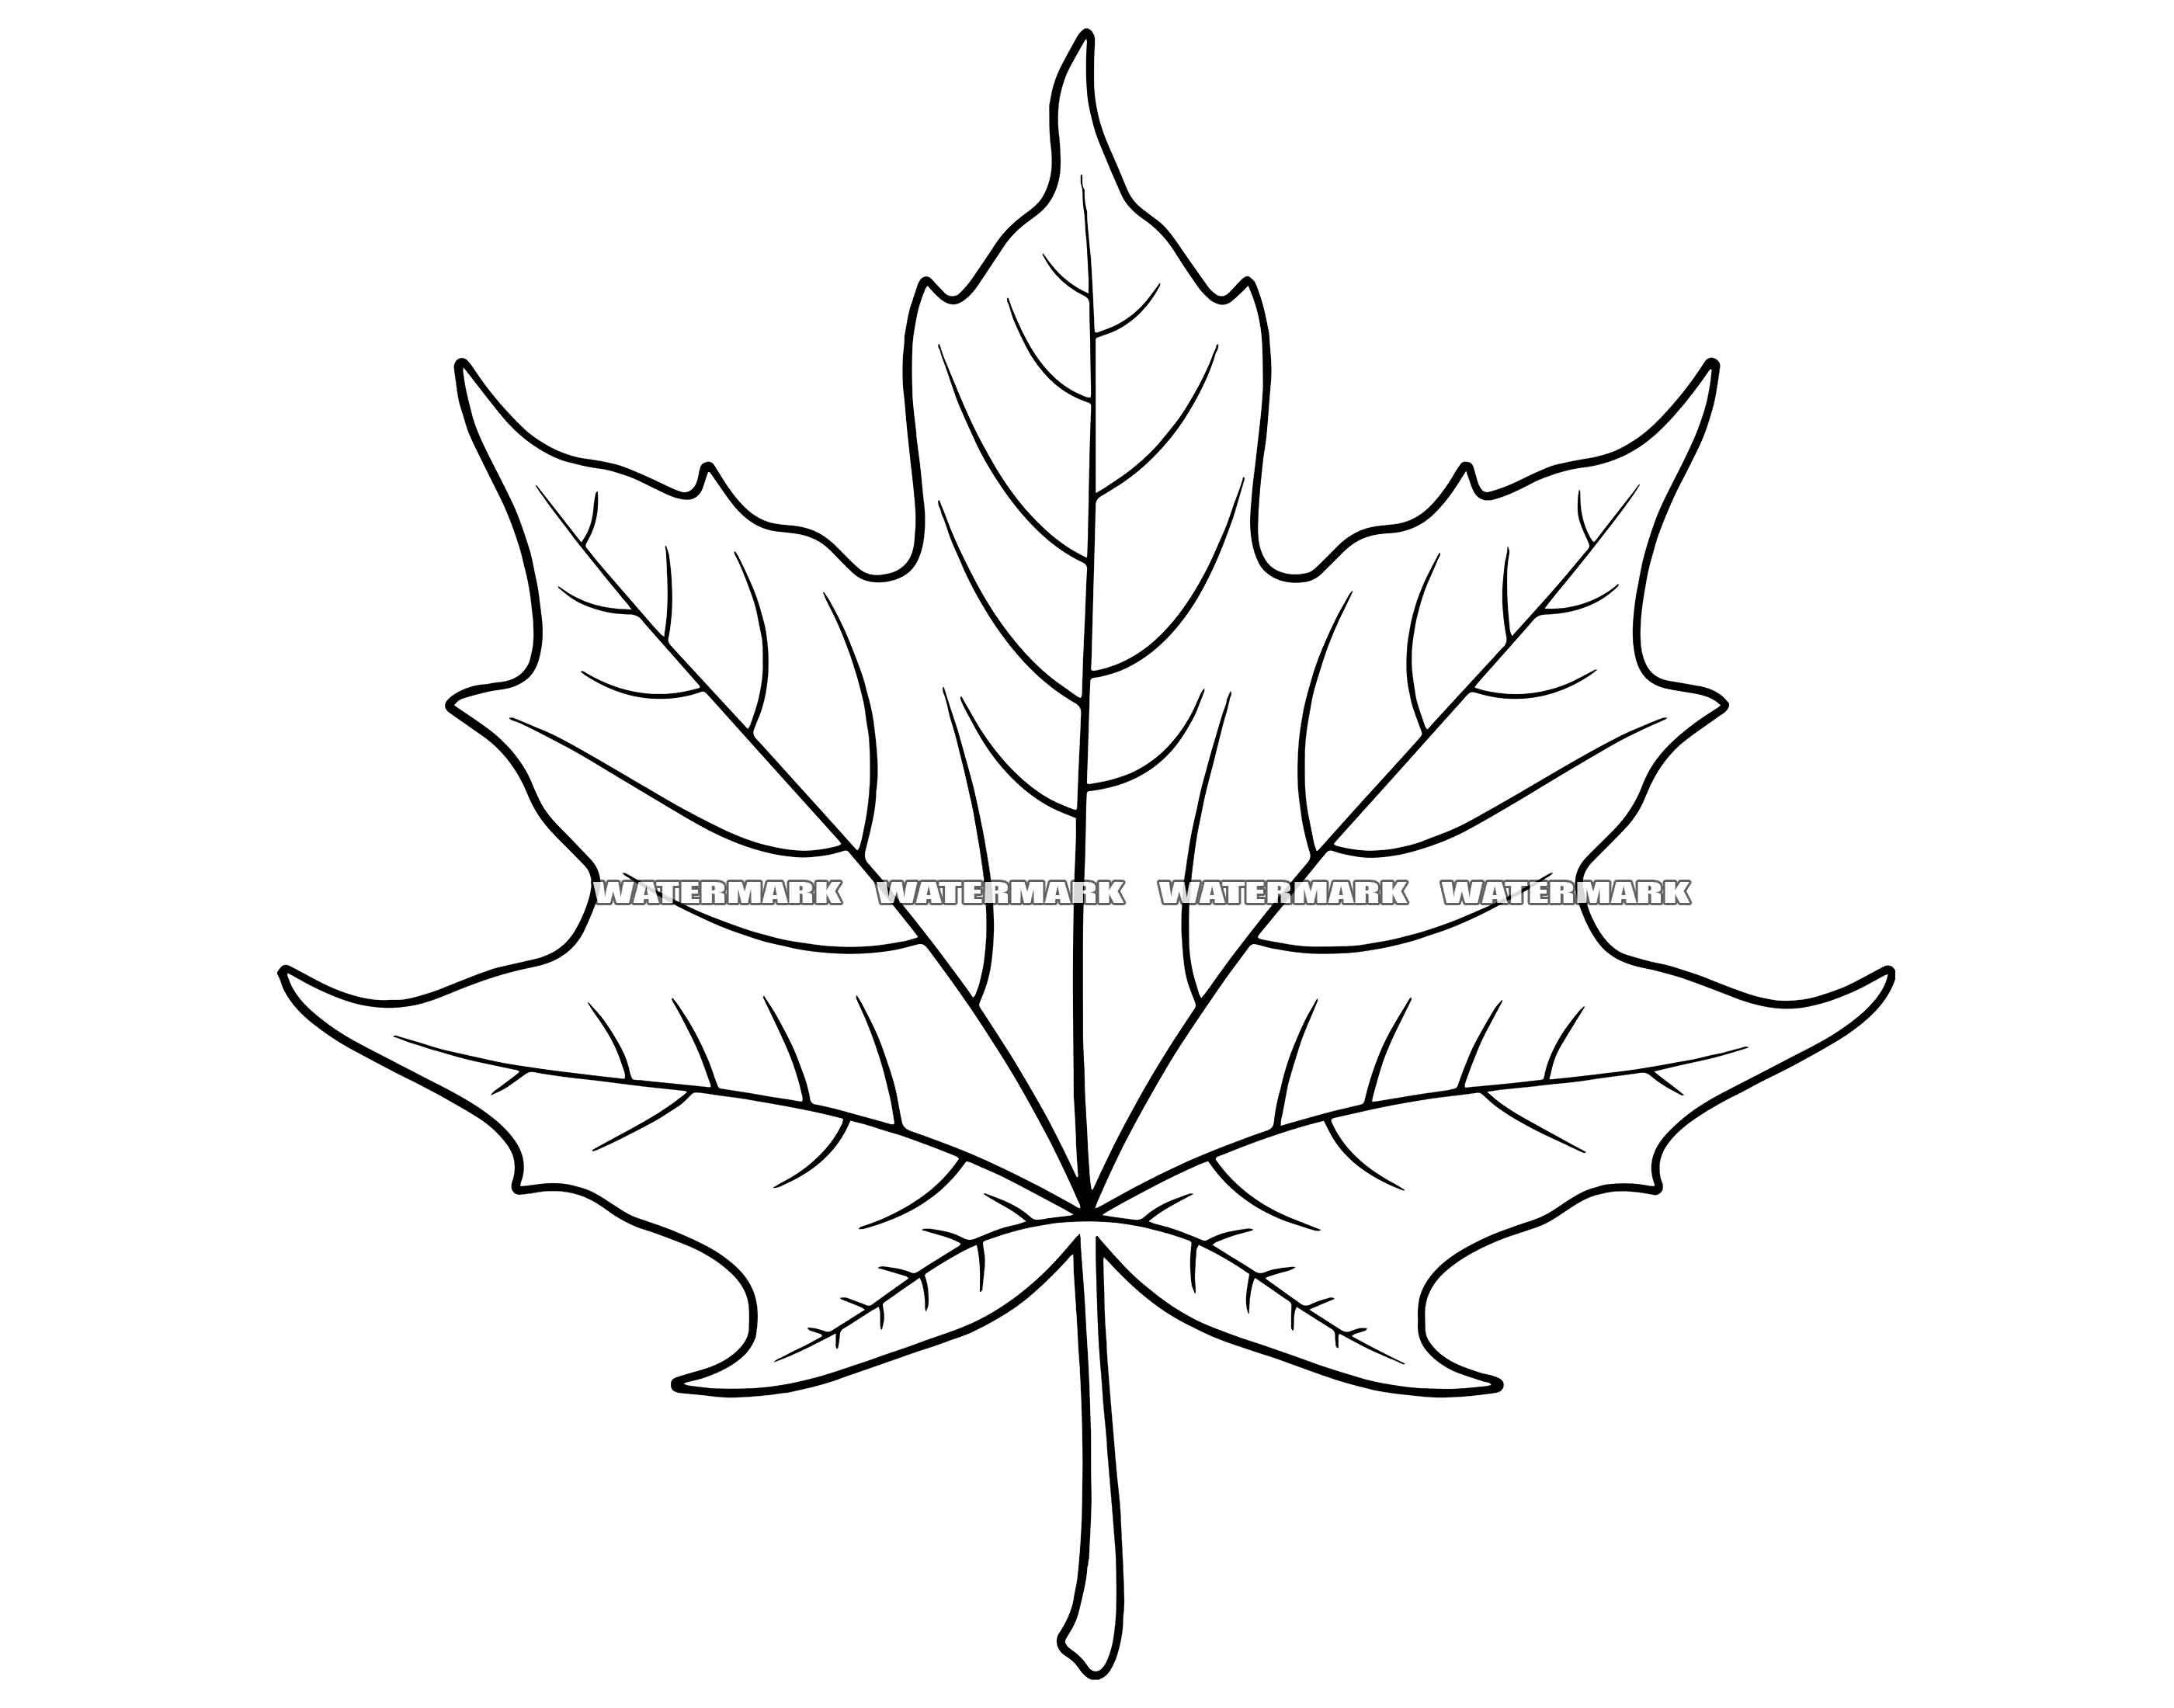 Maple Leaf, Autumn Tree Leafs Line Art. Graphic by prantoart99